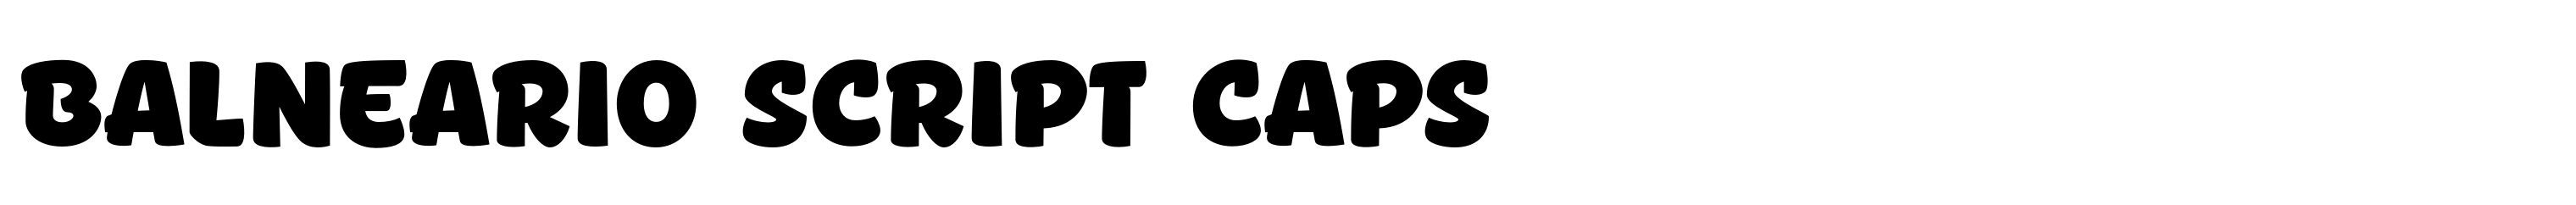 Balneario Script Caps